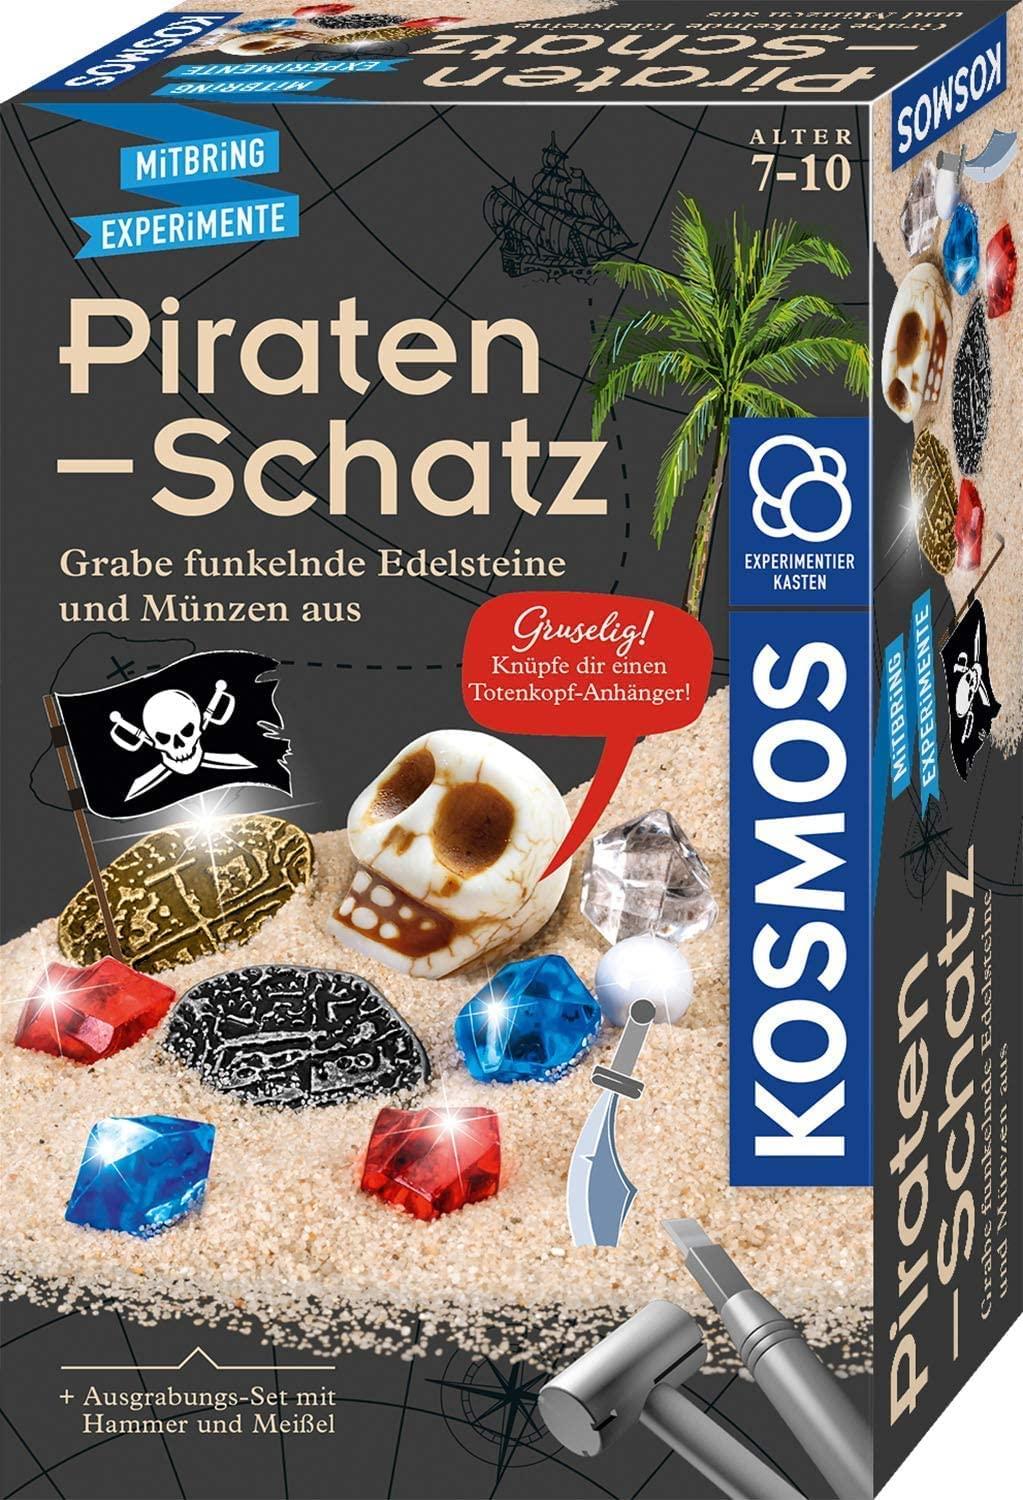 Mitbringexperimente - Piraten-Schatz